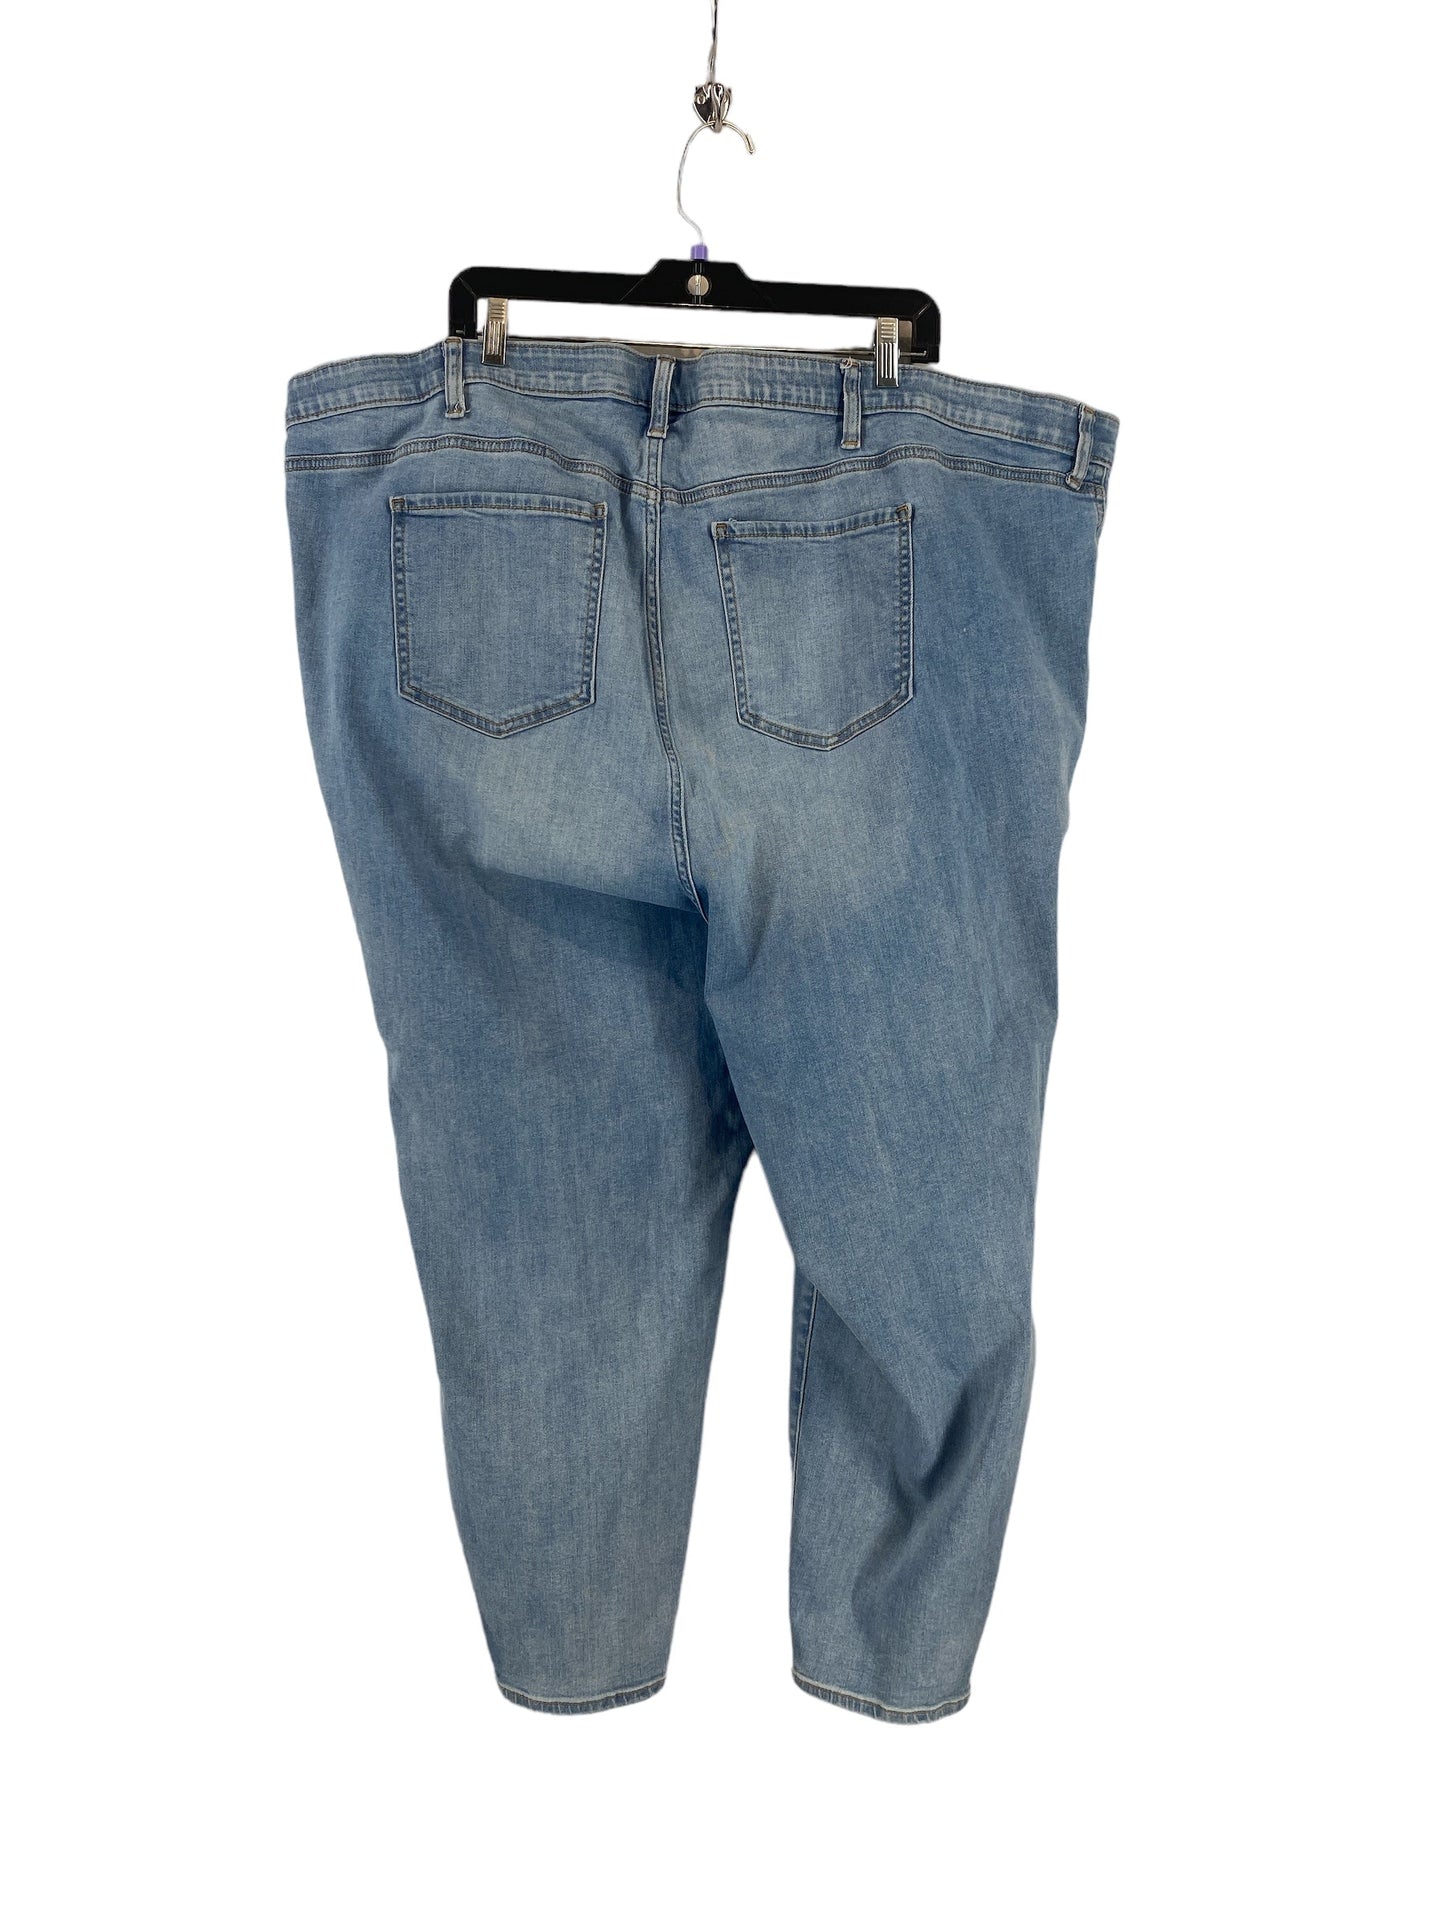 Jeans Skinny By Torrid  Size: 30